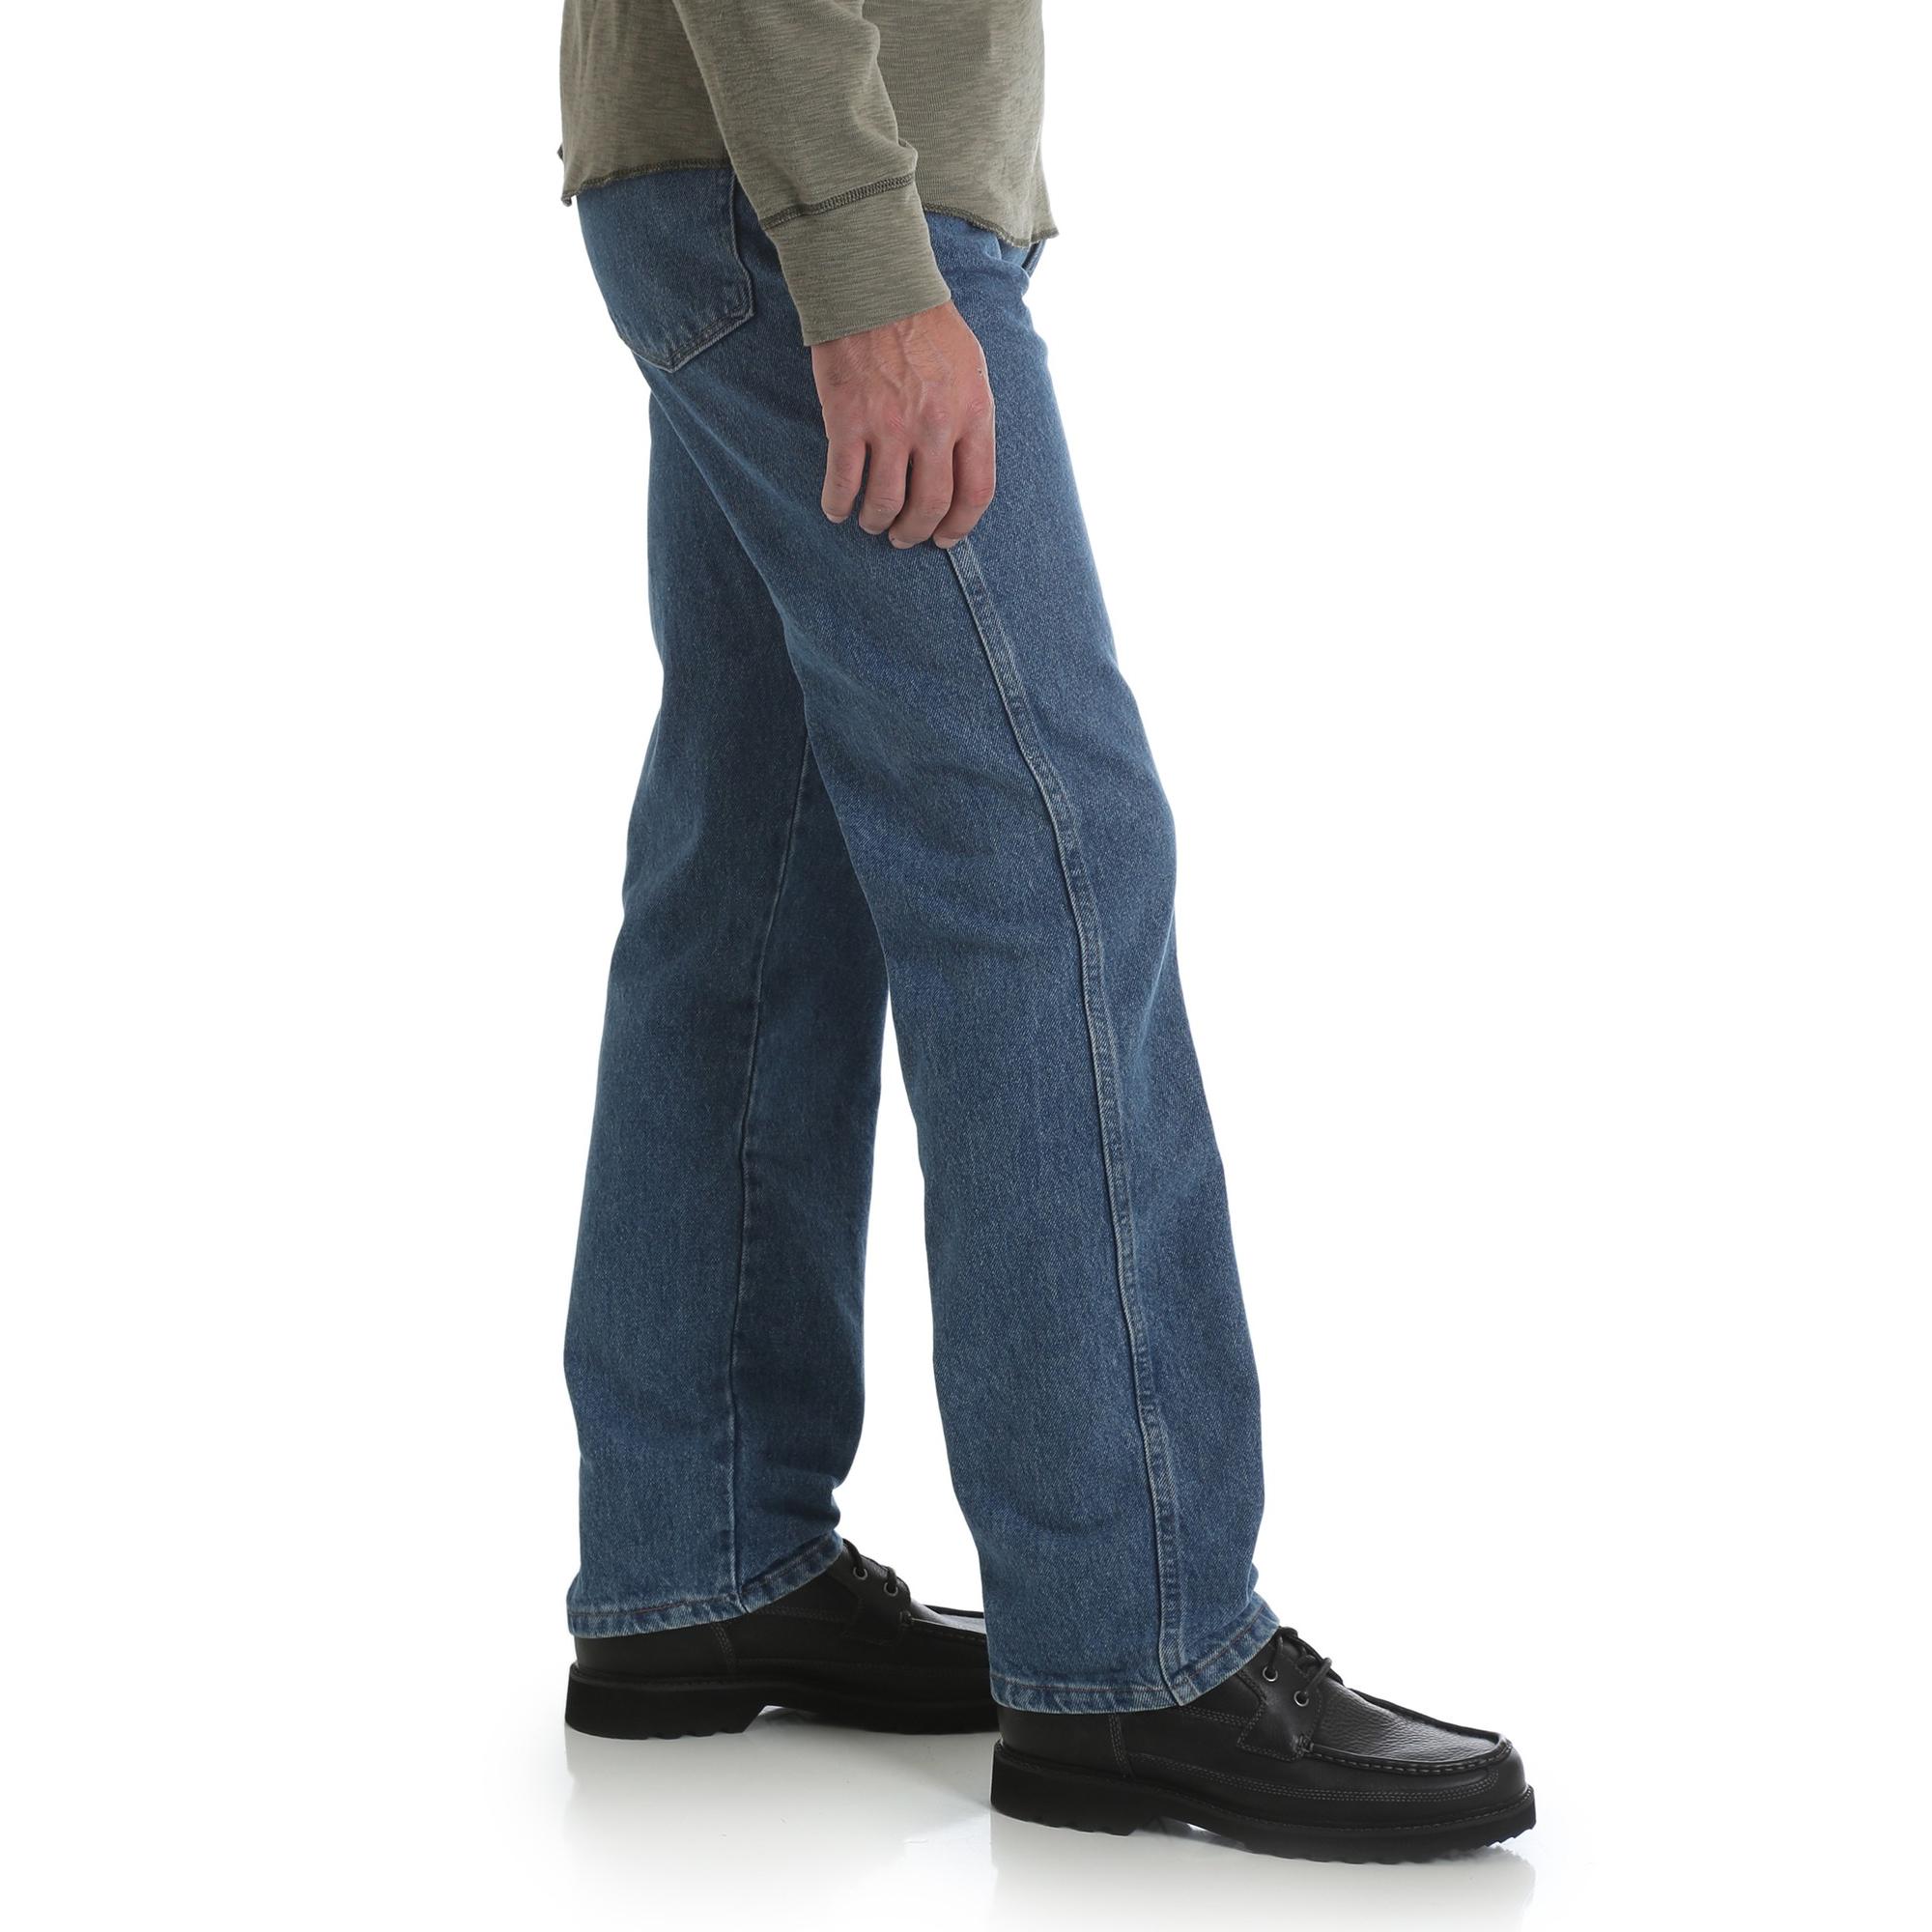 Wrangler Rustler Men's and Big Men's Regular Fit Jeans - image 4 of 7